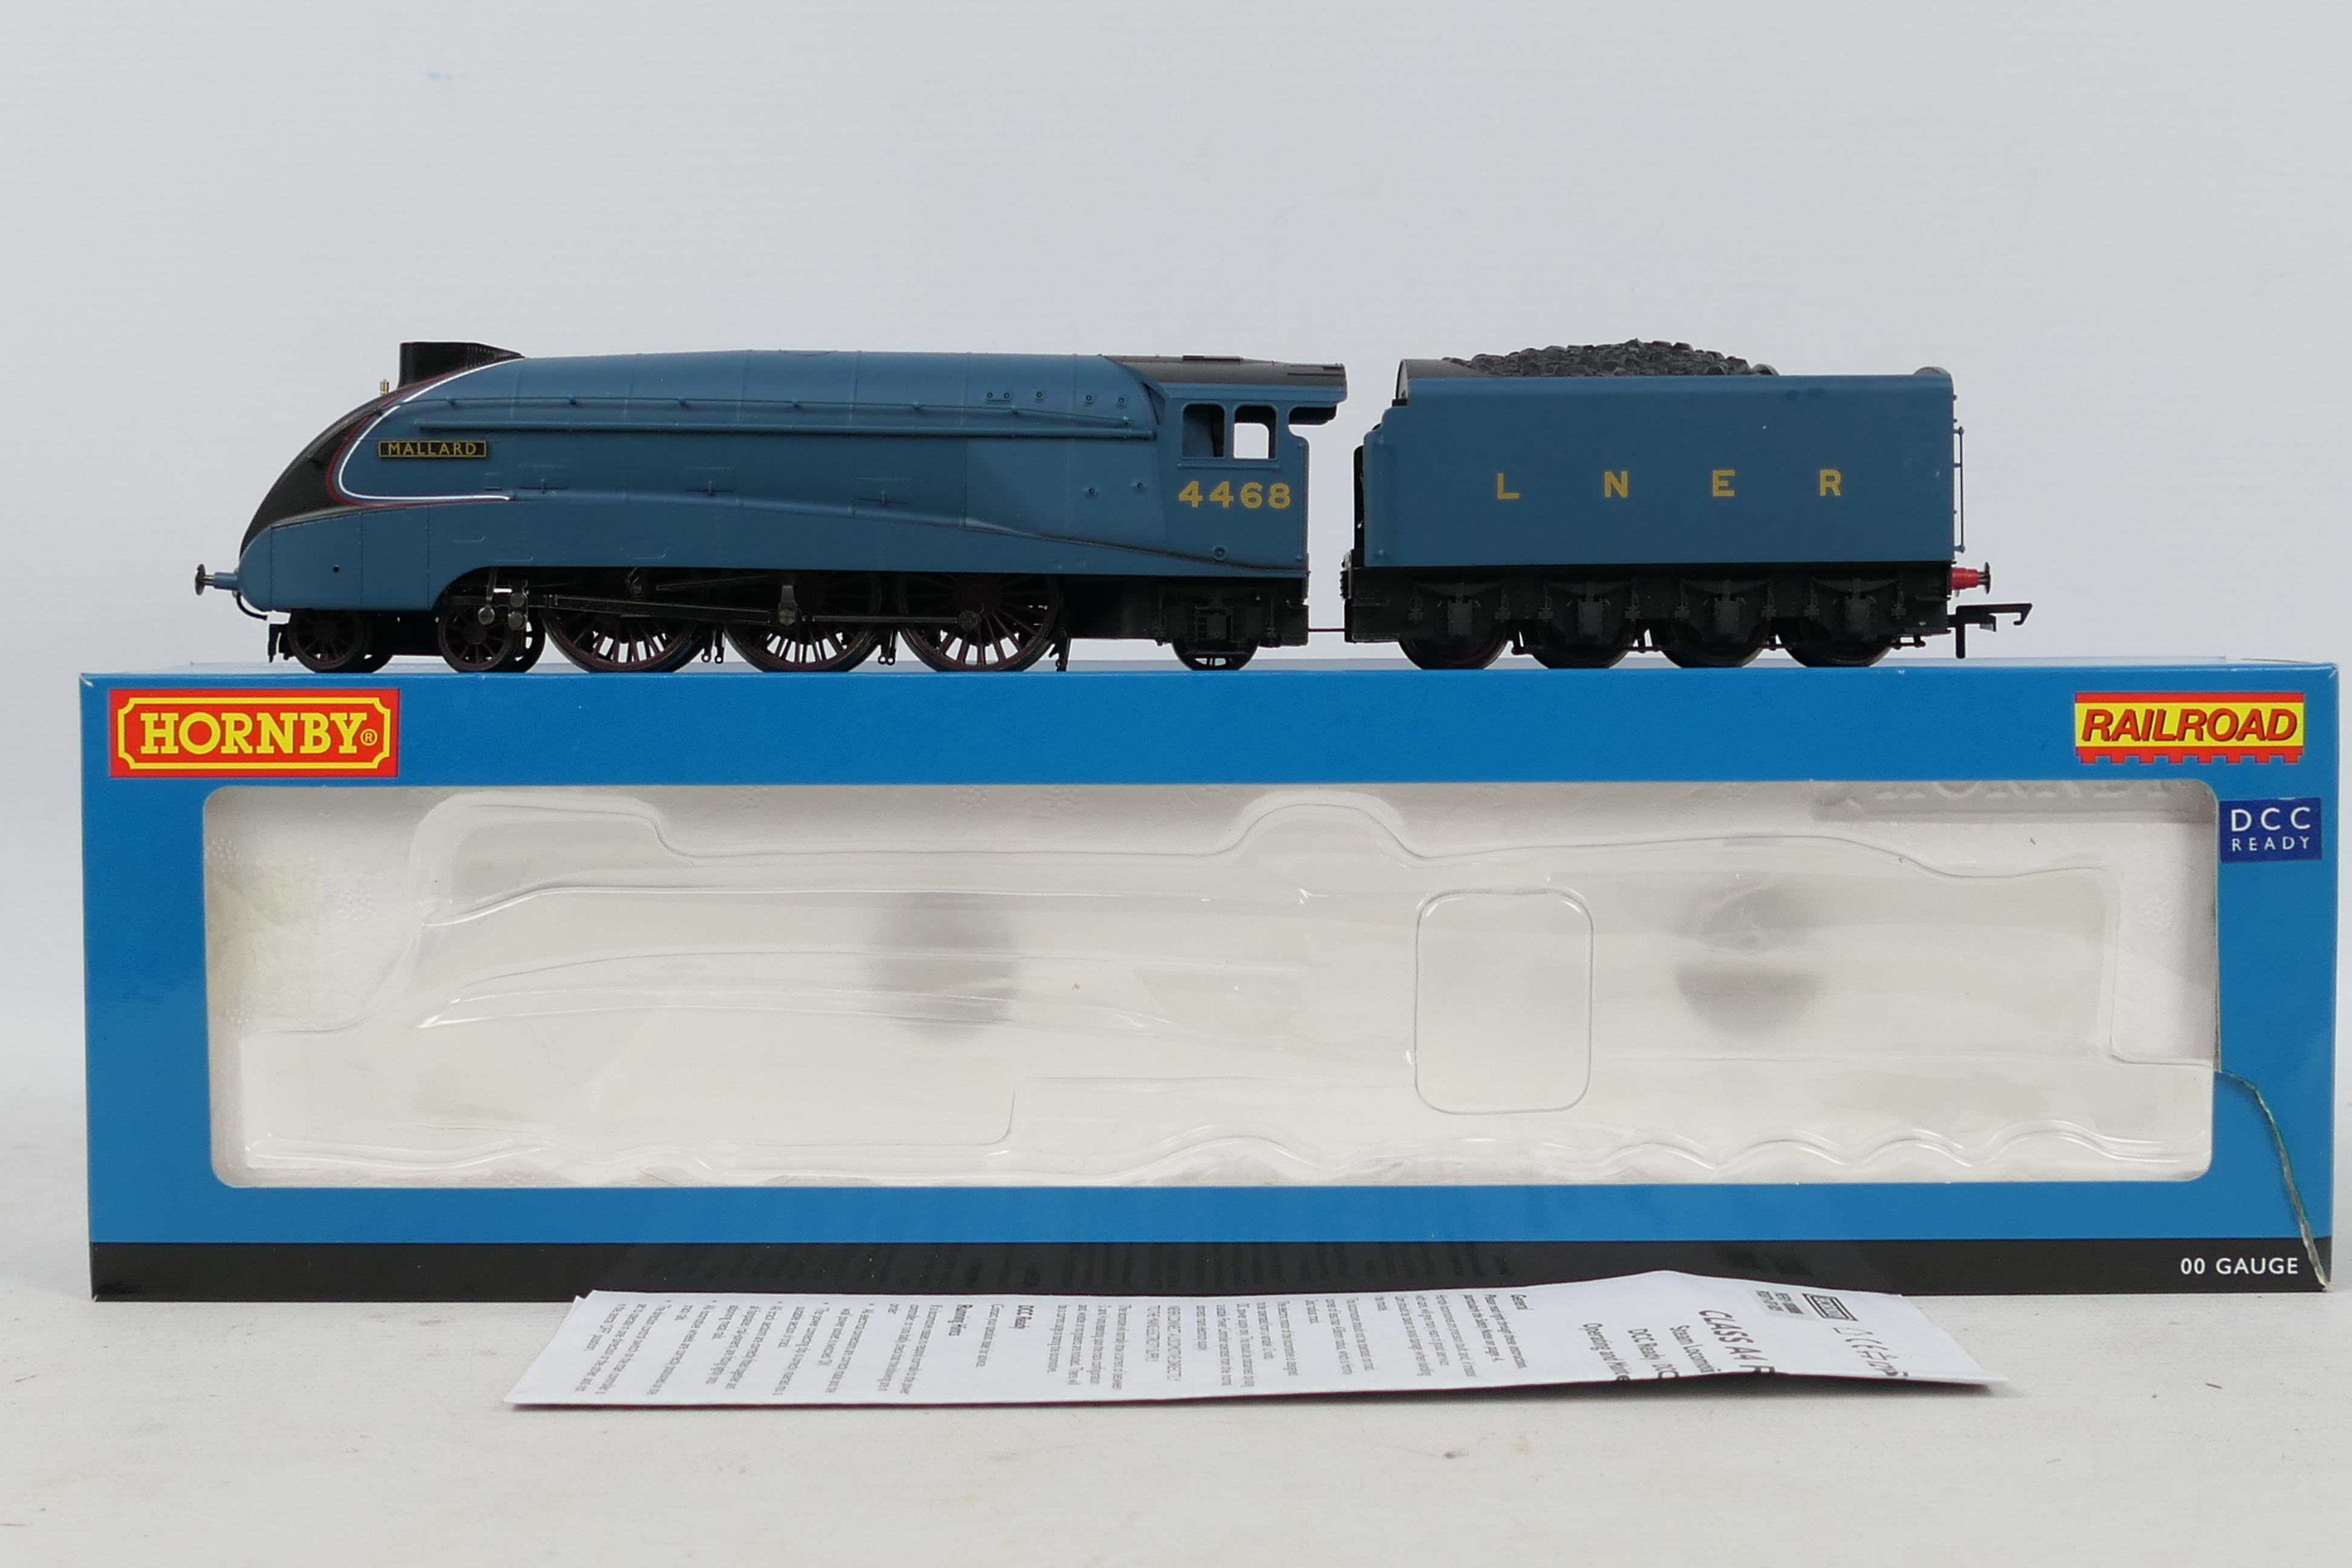 Hornby - Mallard. A boxed Hornby R3371 LNER Class A4 'Mallard' No.